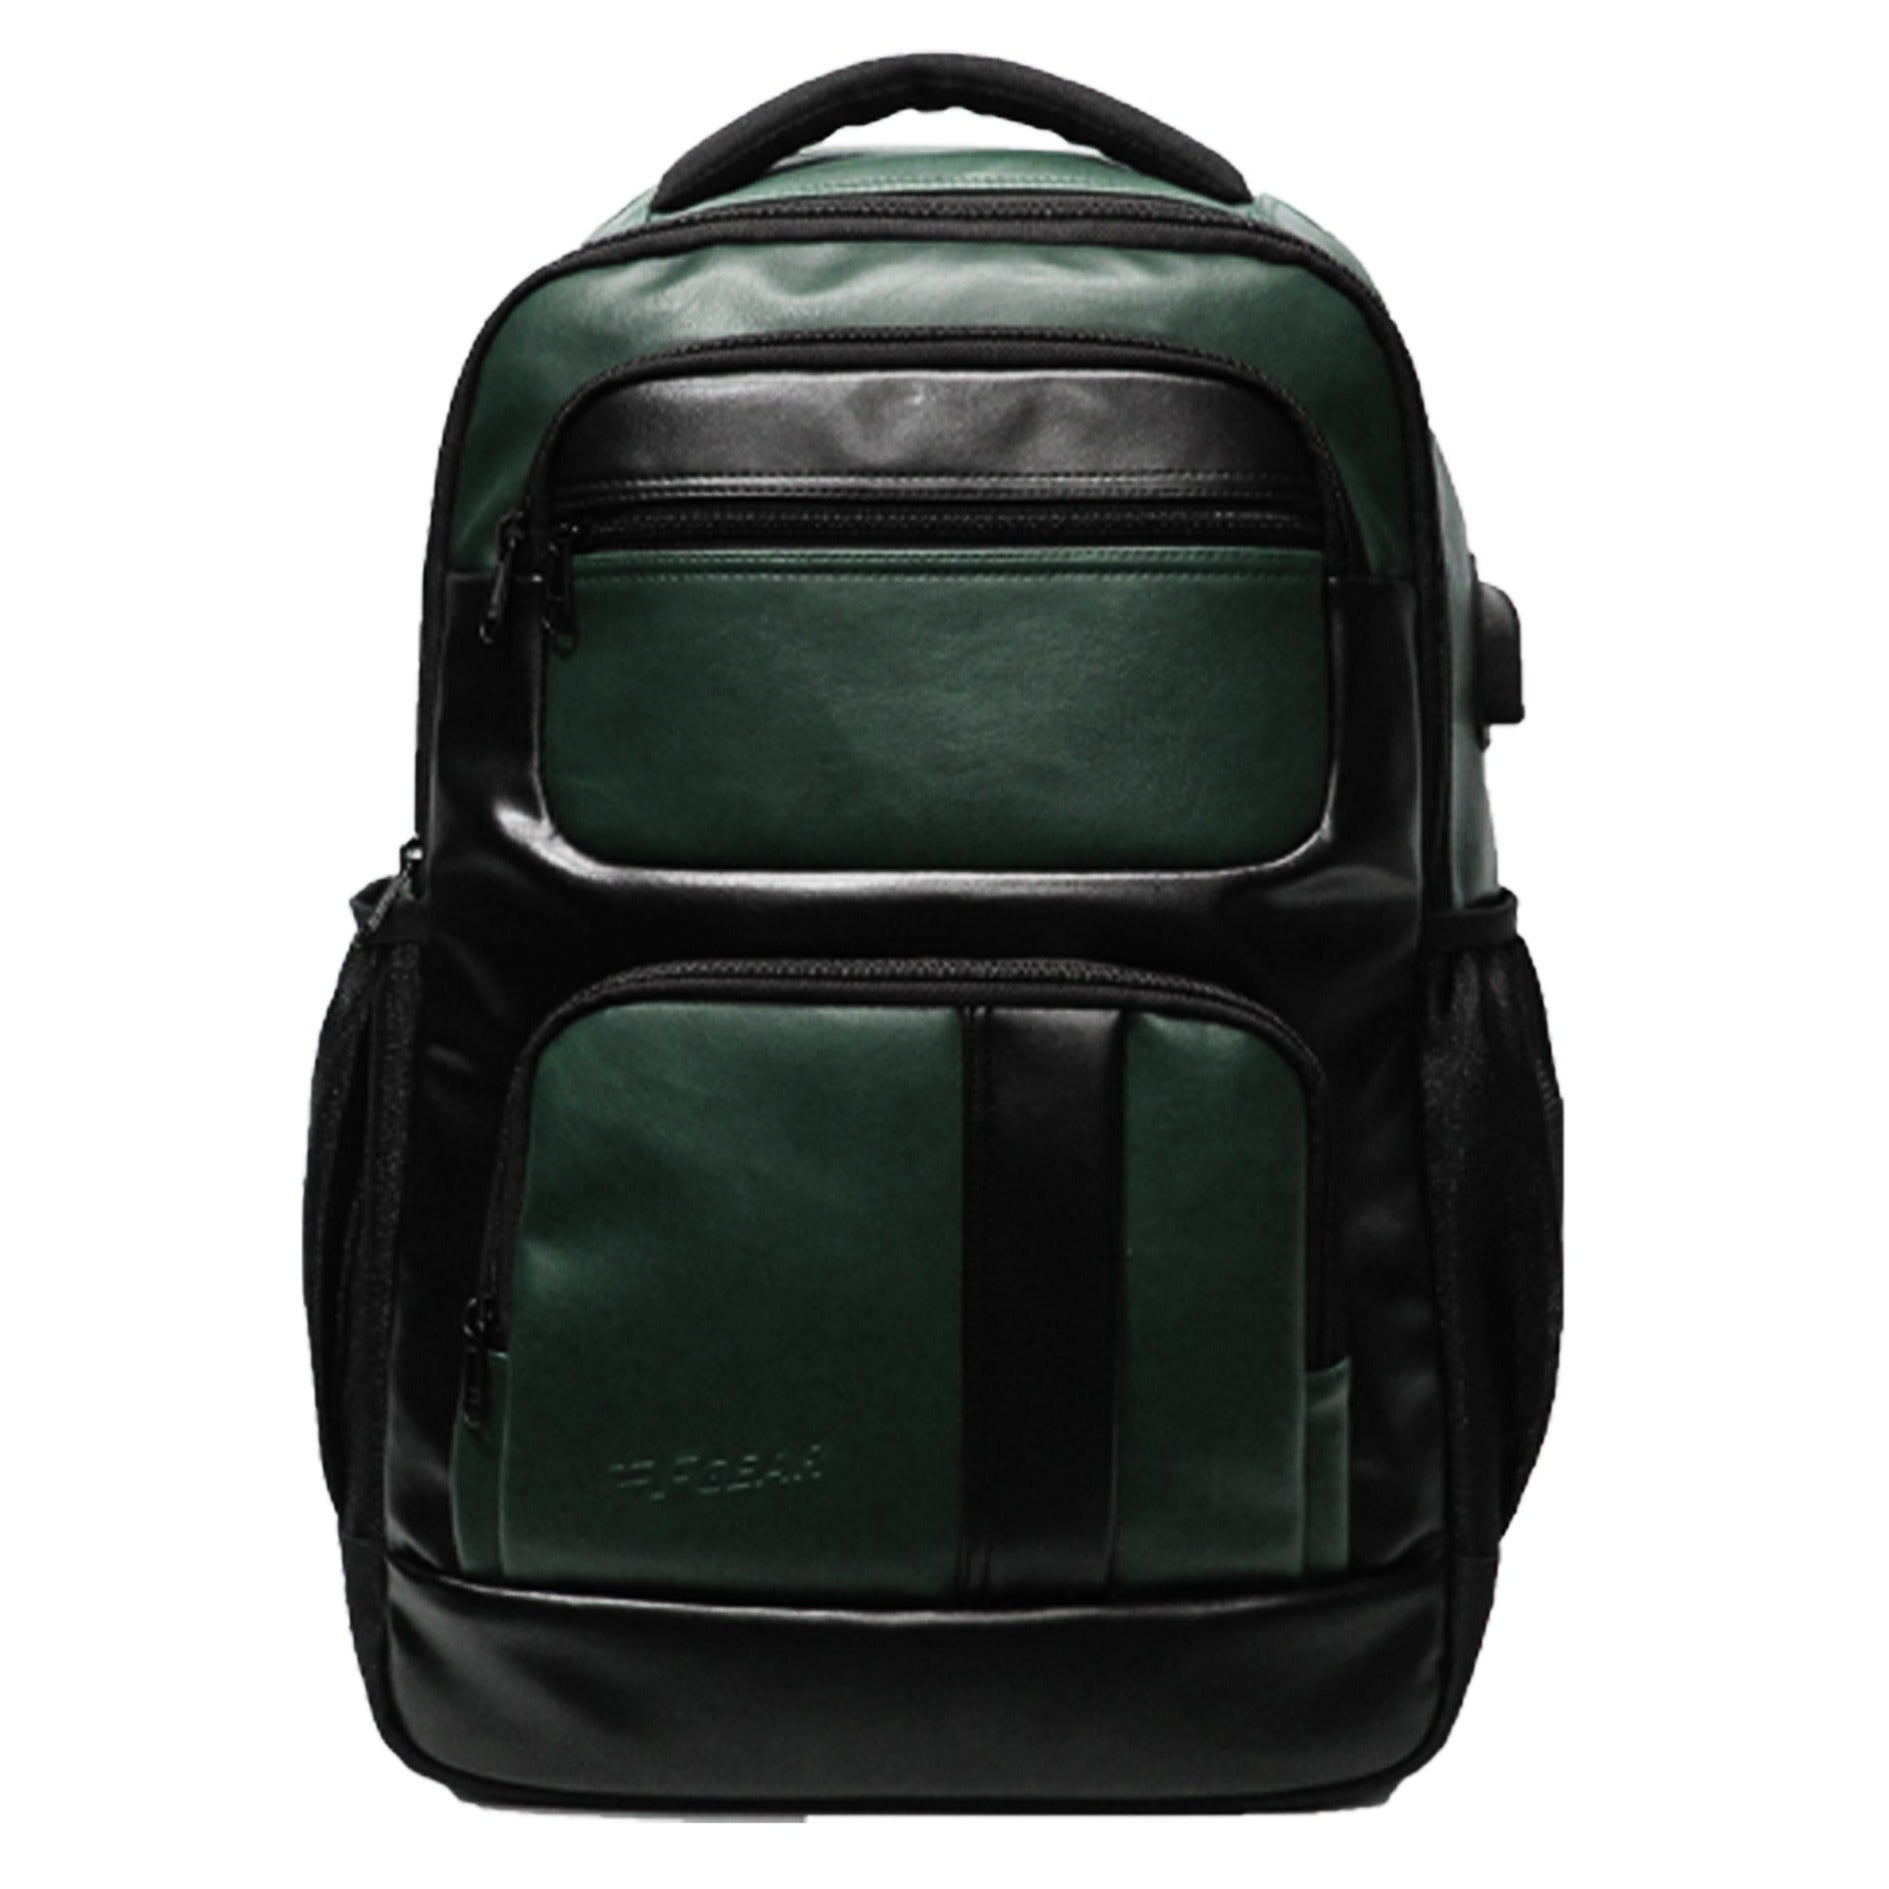 Green Handbags - Buy Green Handbags online in India